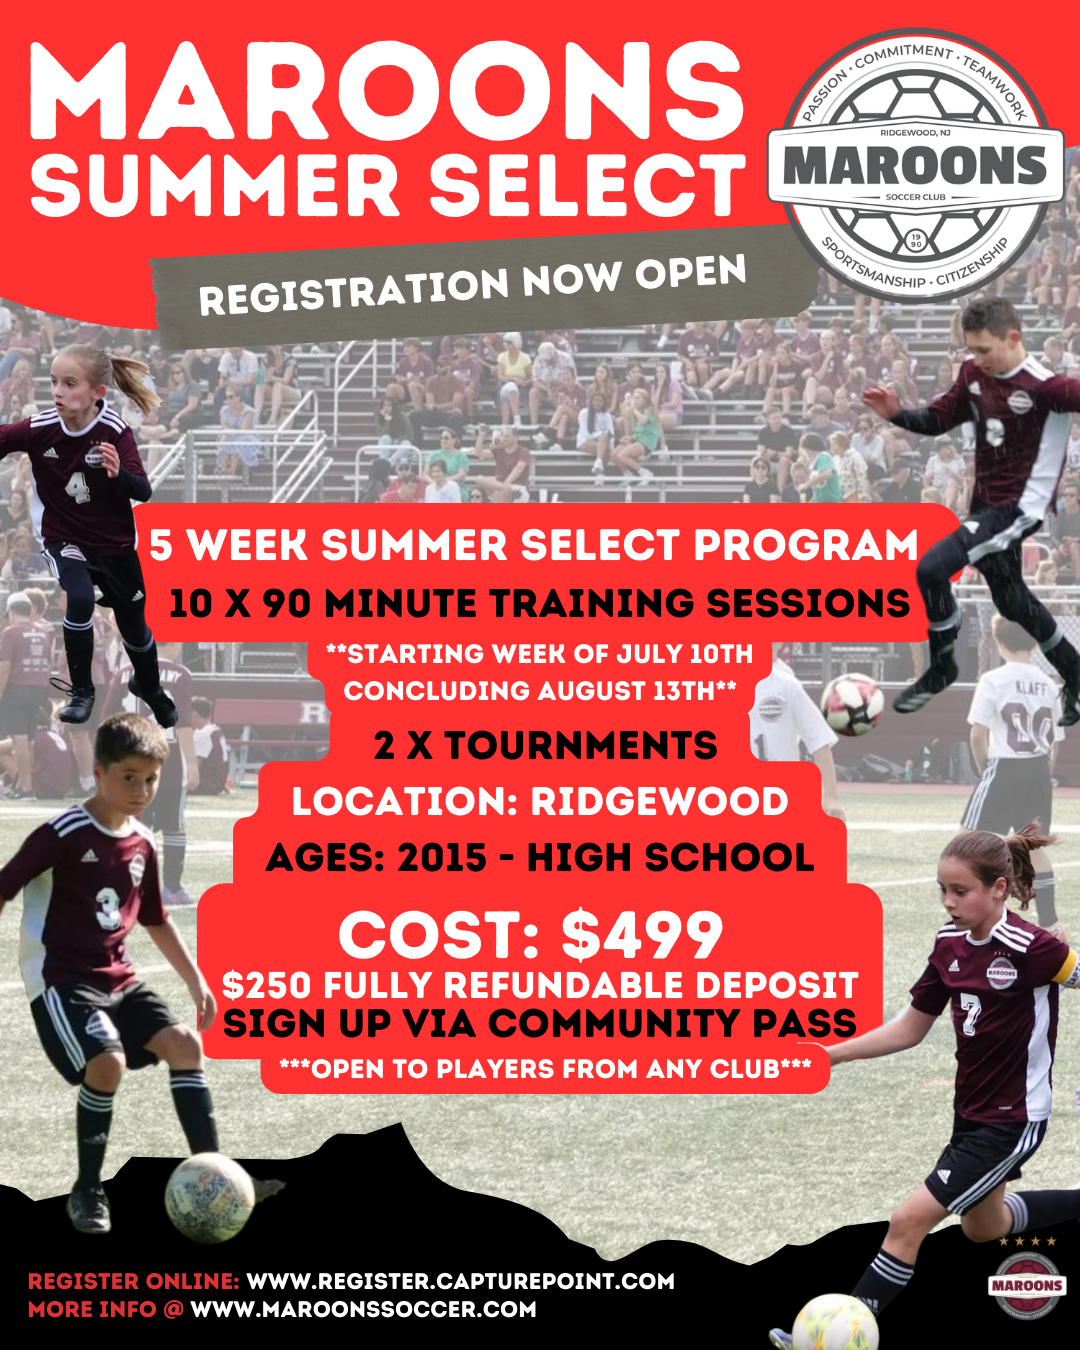 Summer Programs - Maroons Soccer Club - Ridgewood, NJ